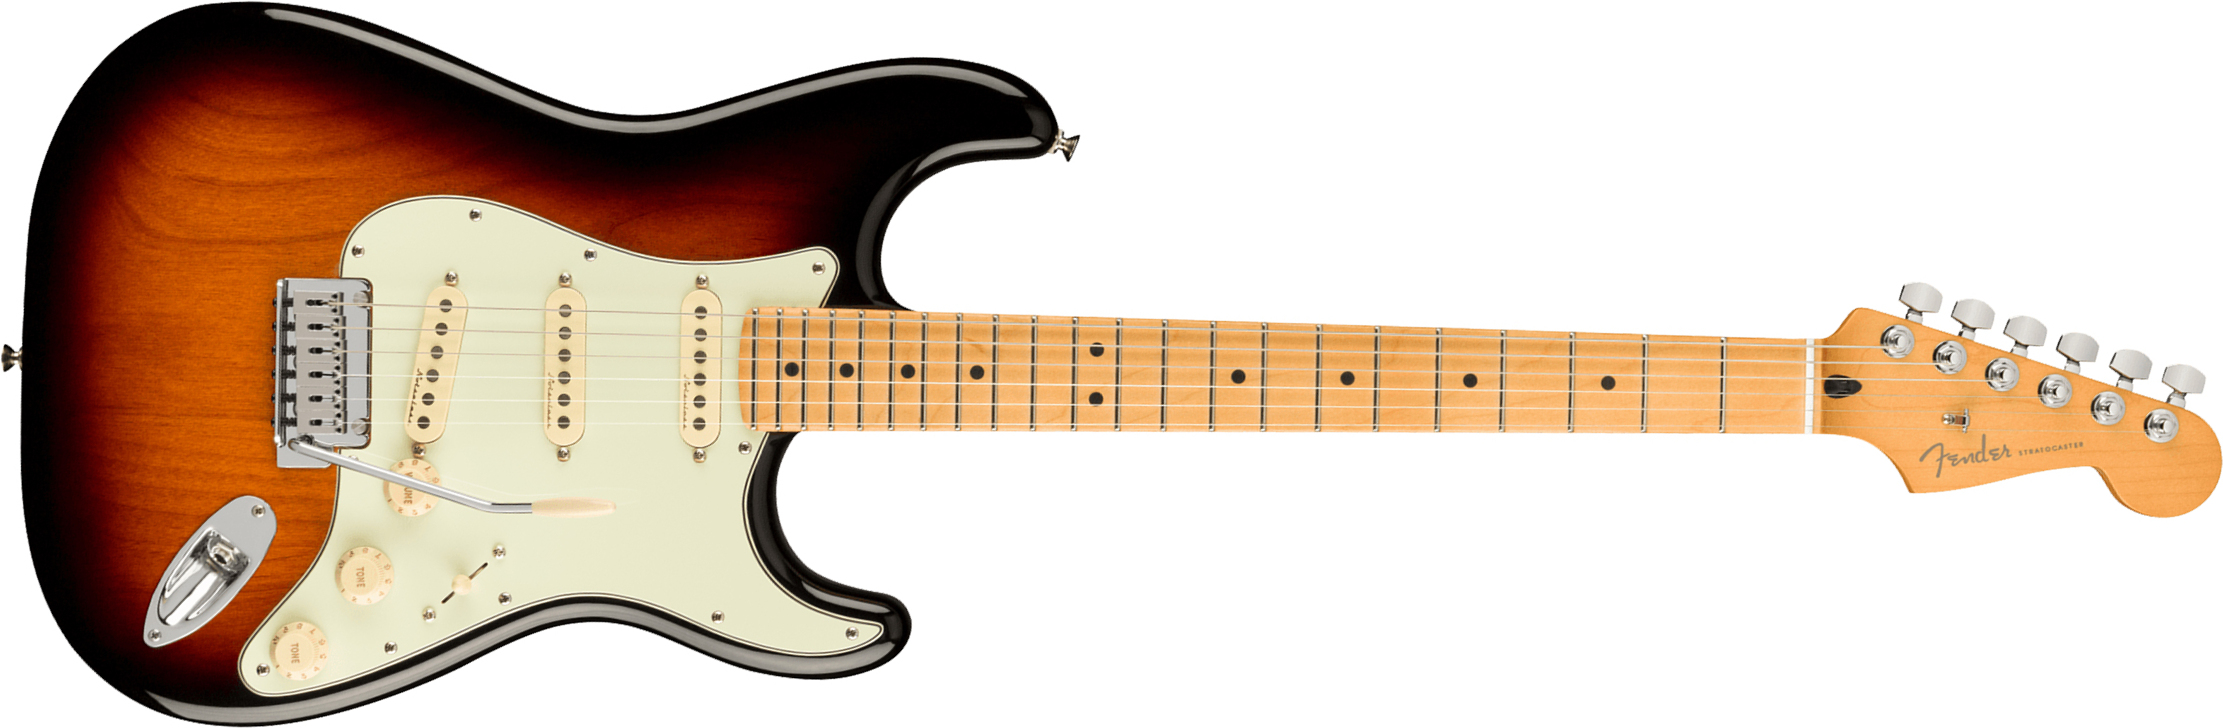 Fender Strat Player Plus Mex 3s Trem Mn - 3-color Sunburst - E-Gitarre in Str-Form - Main picture